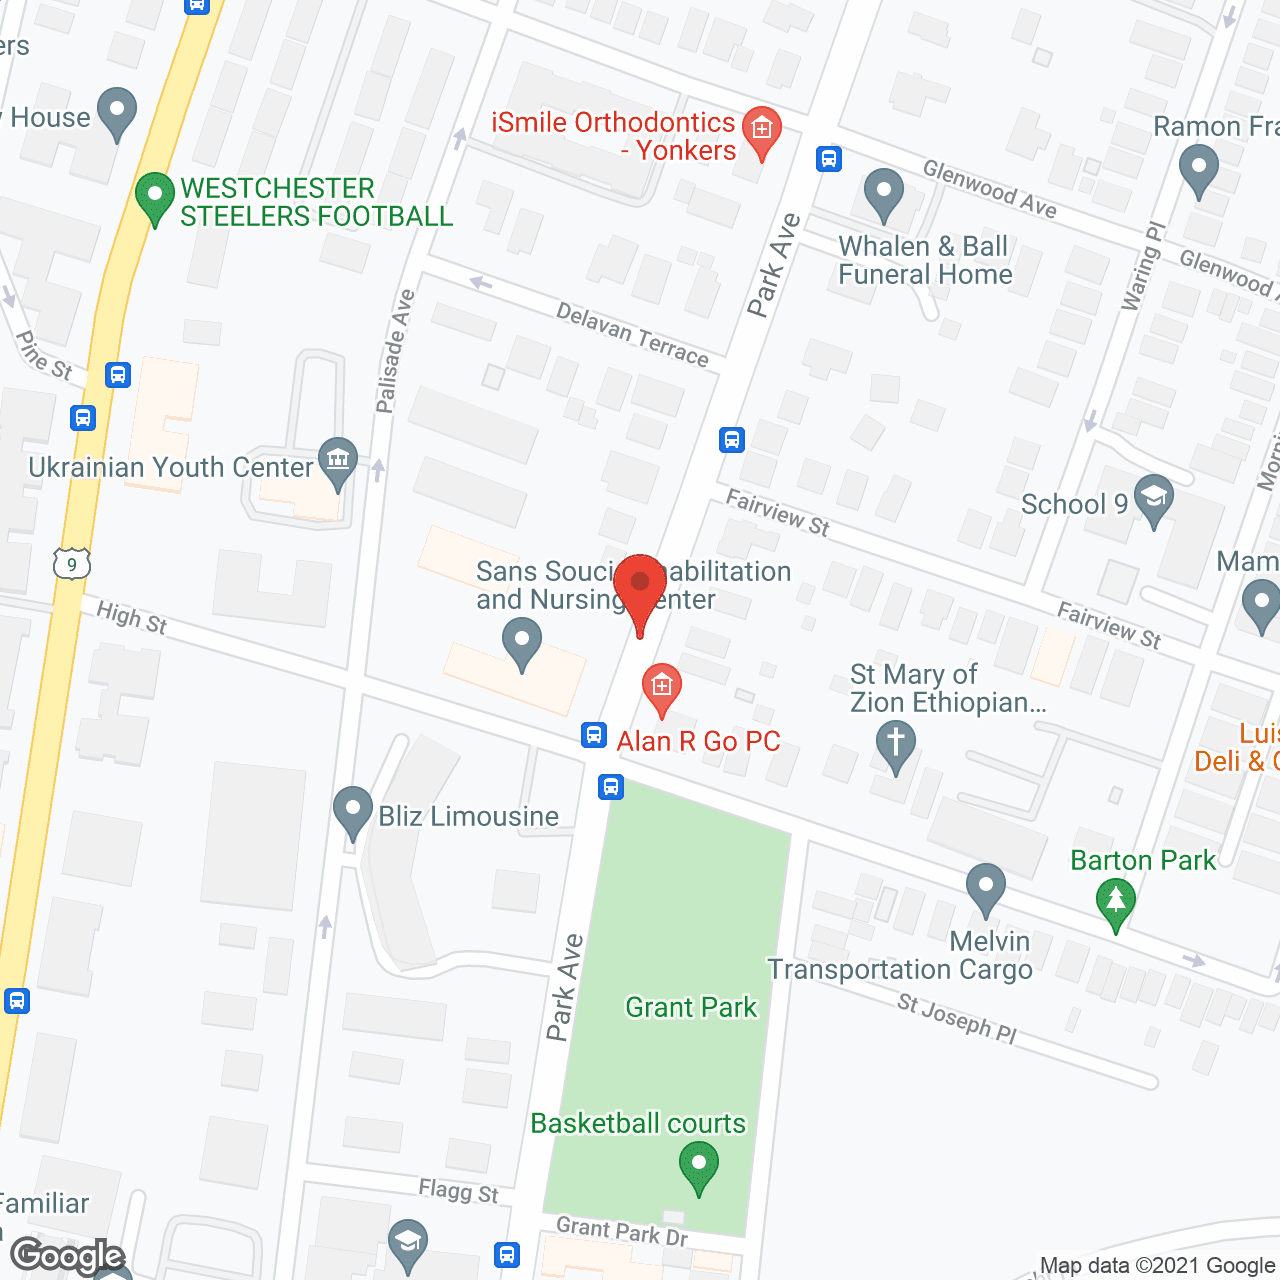 Sans Souci Rehabilitation and Nursing Center in google map